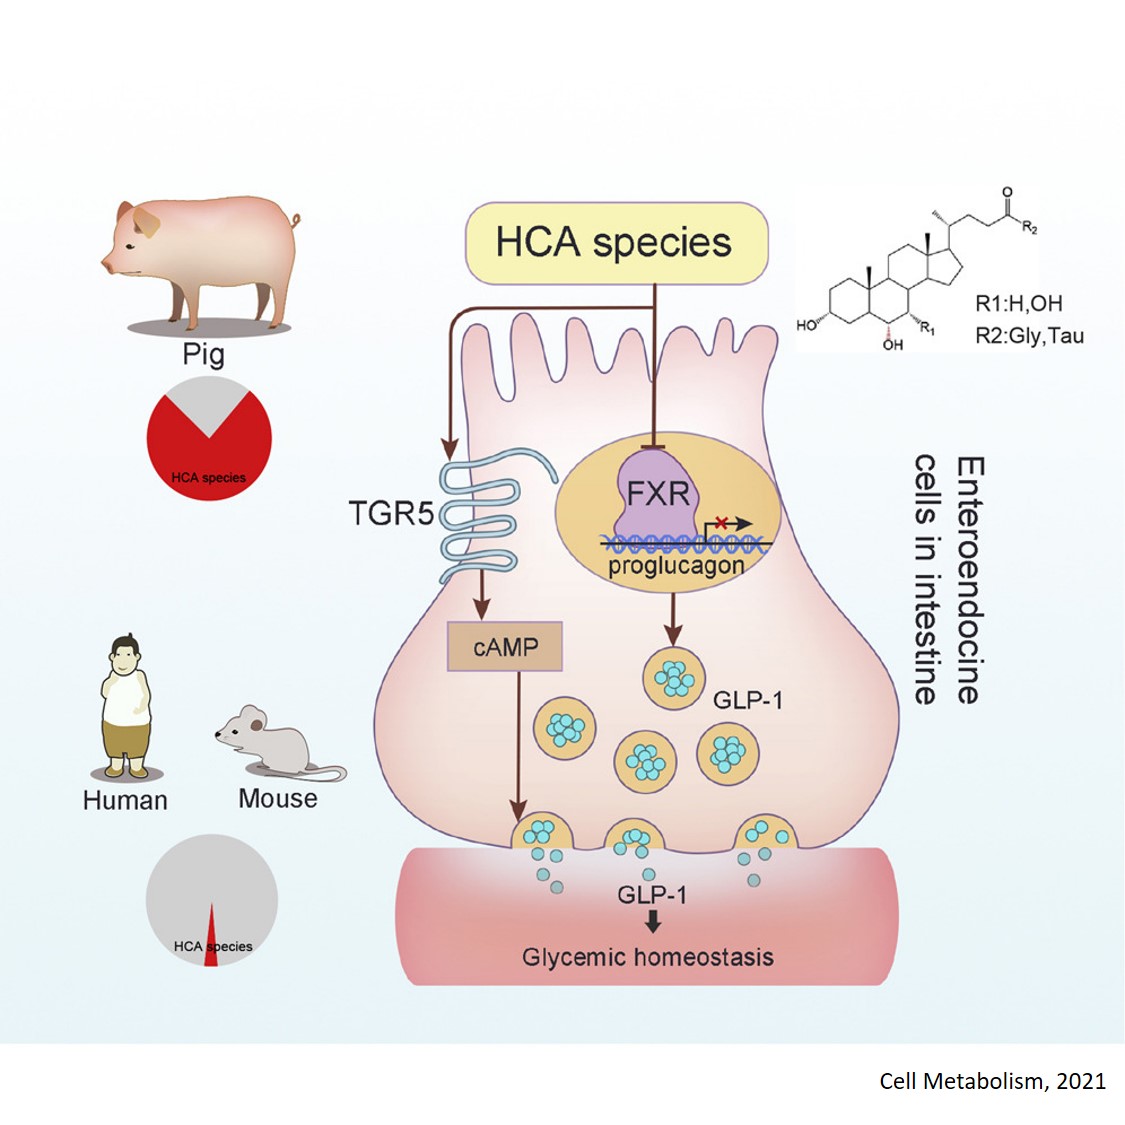 Hyocholic acid species as novel biomarkers for type 2 diabetes